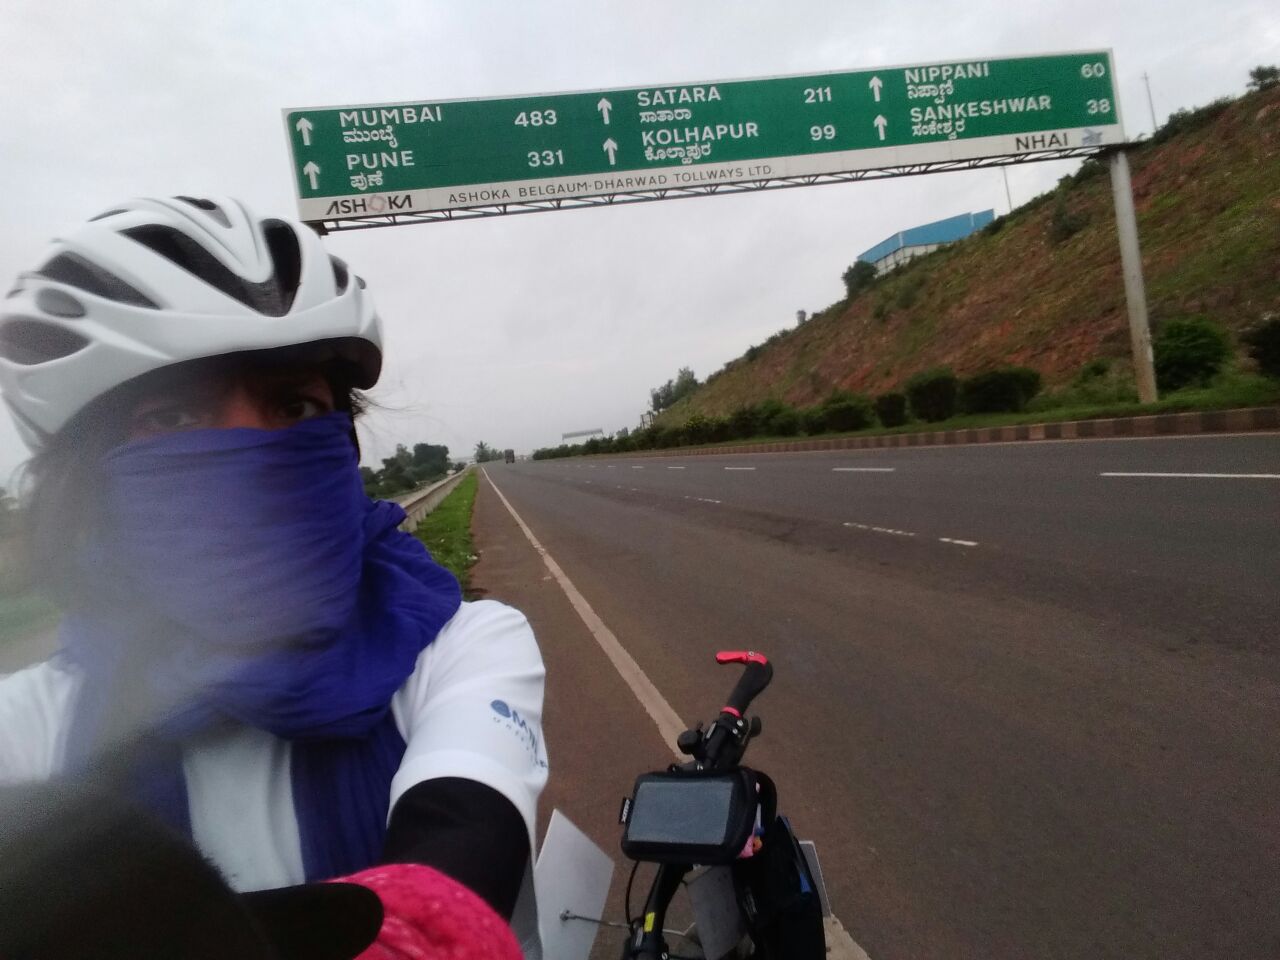 Long way to go- Kolhapur 99 kilometres